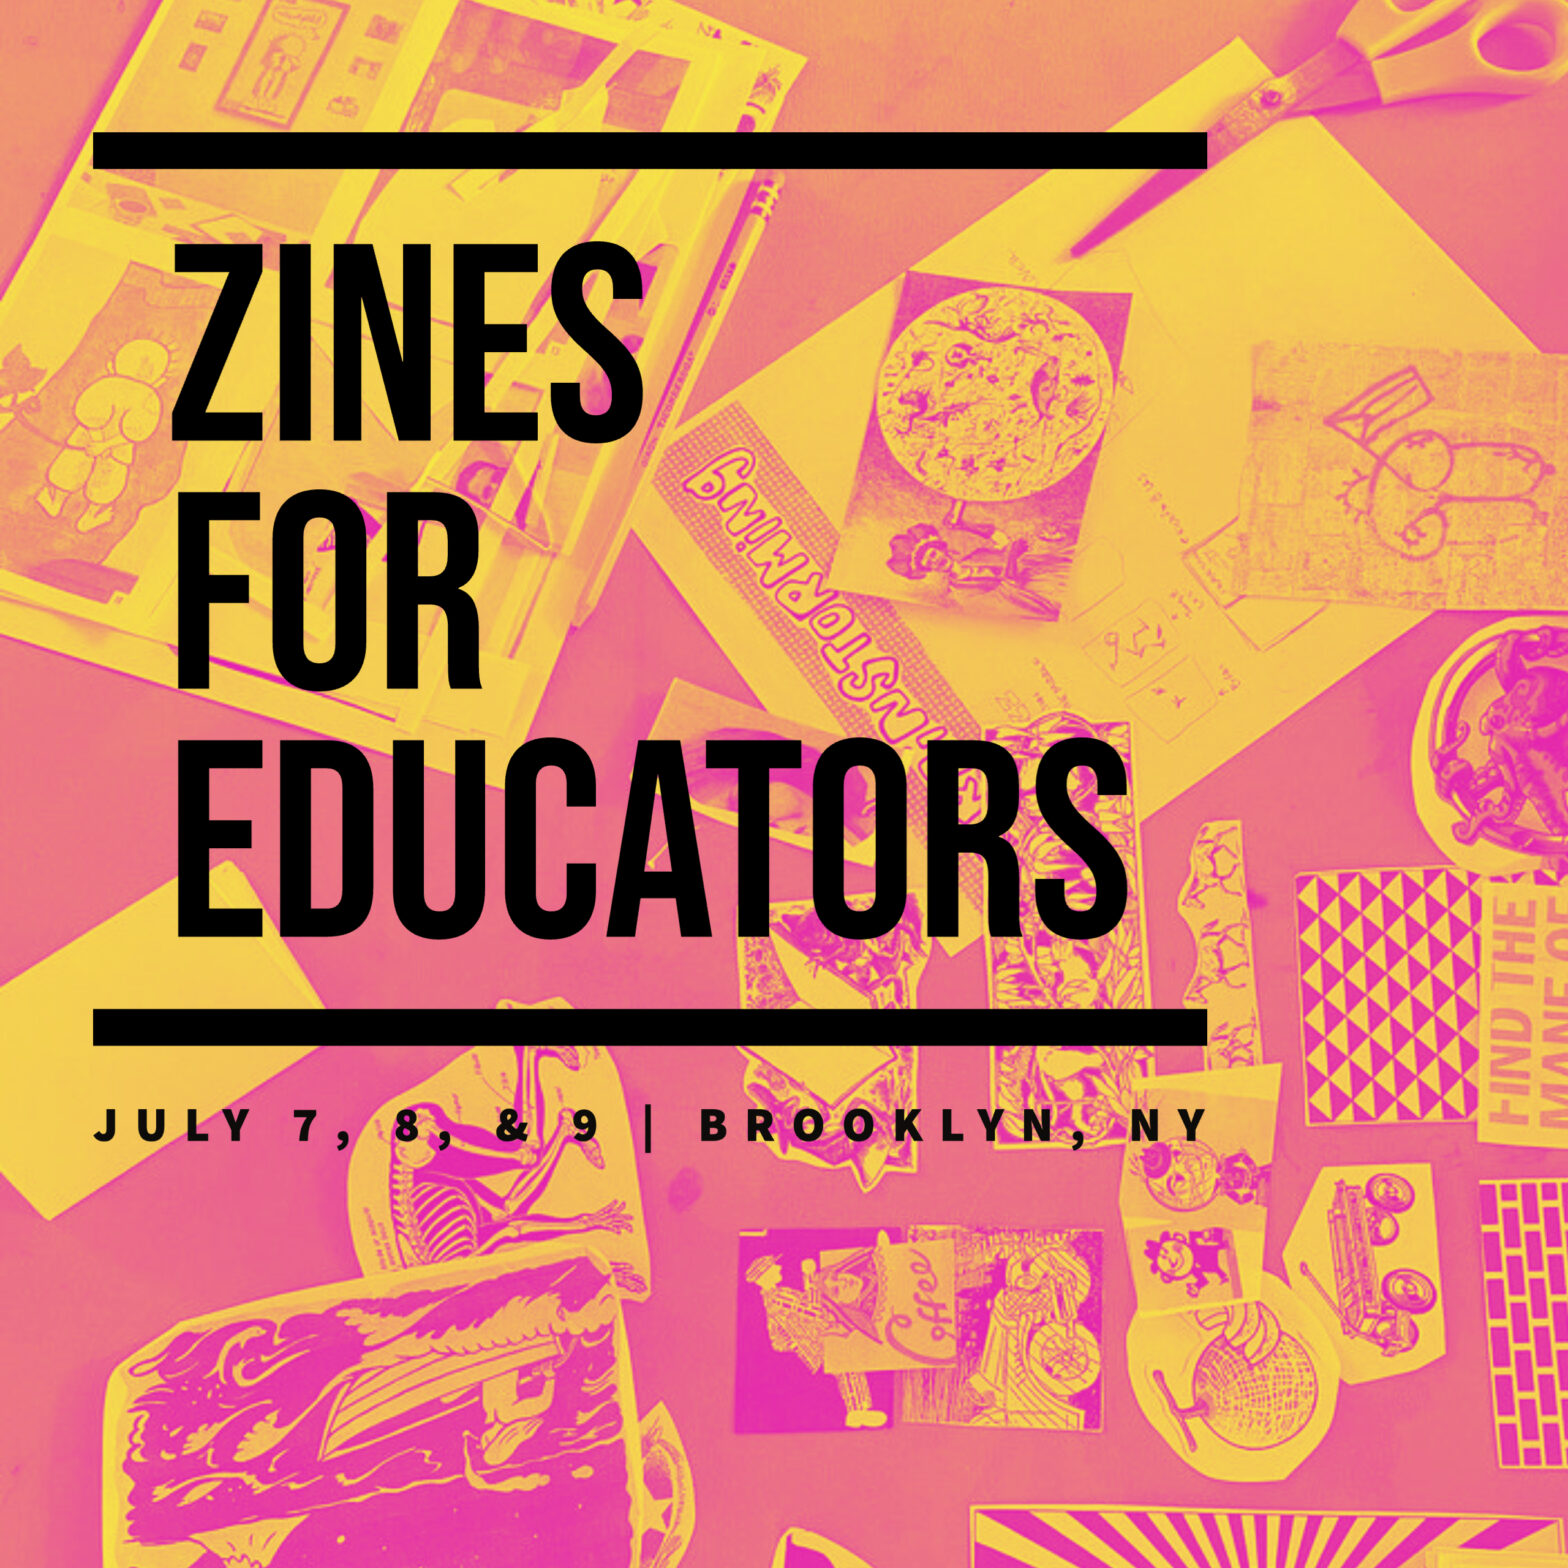 Zines for Educators!